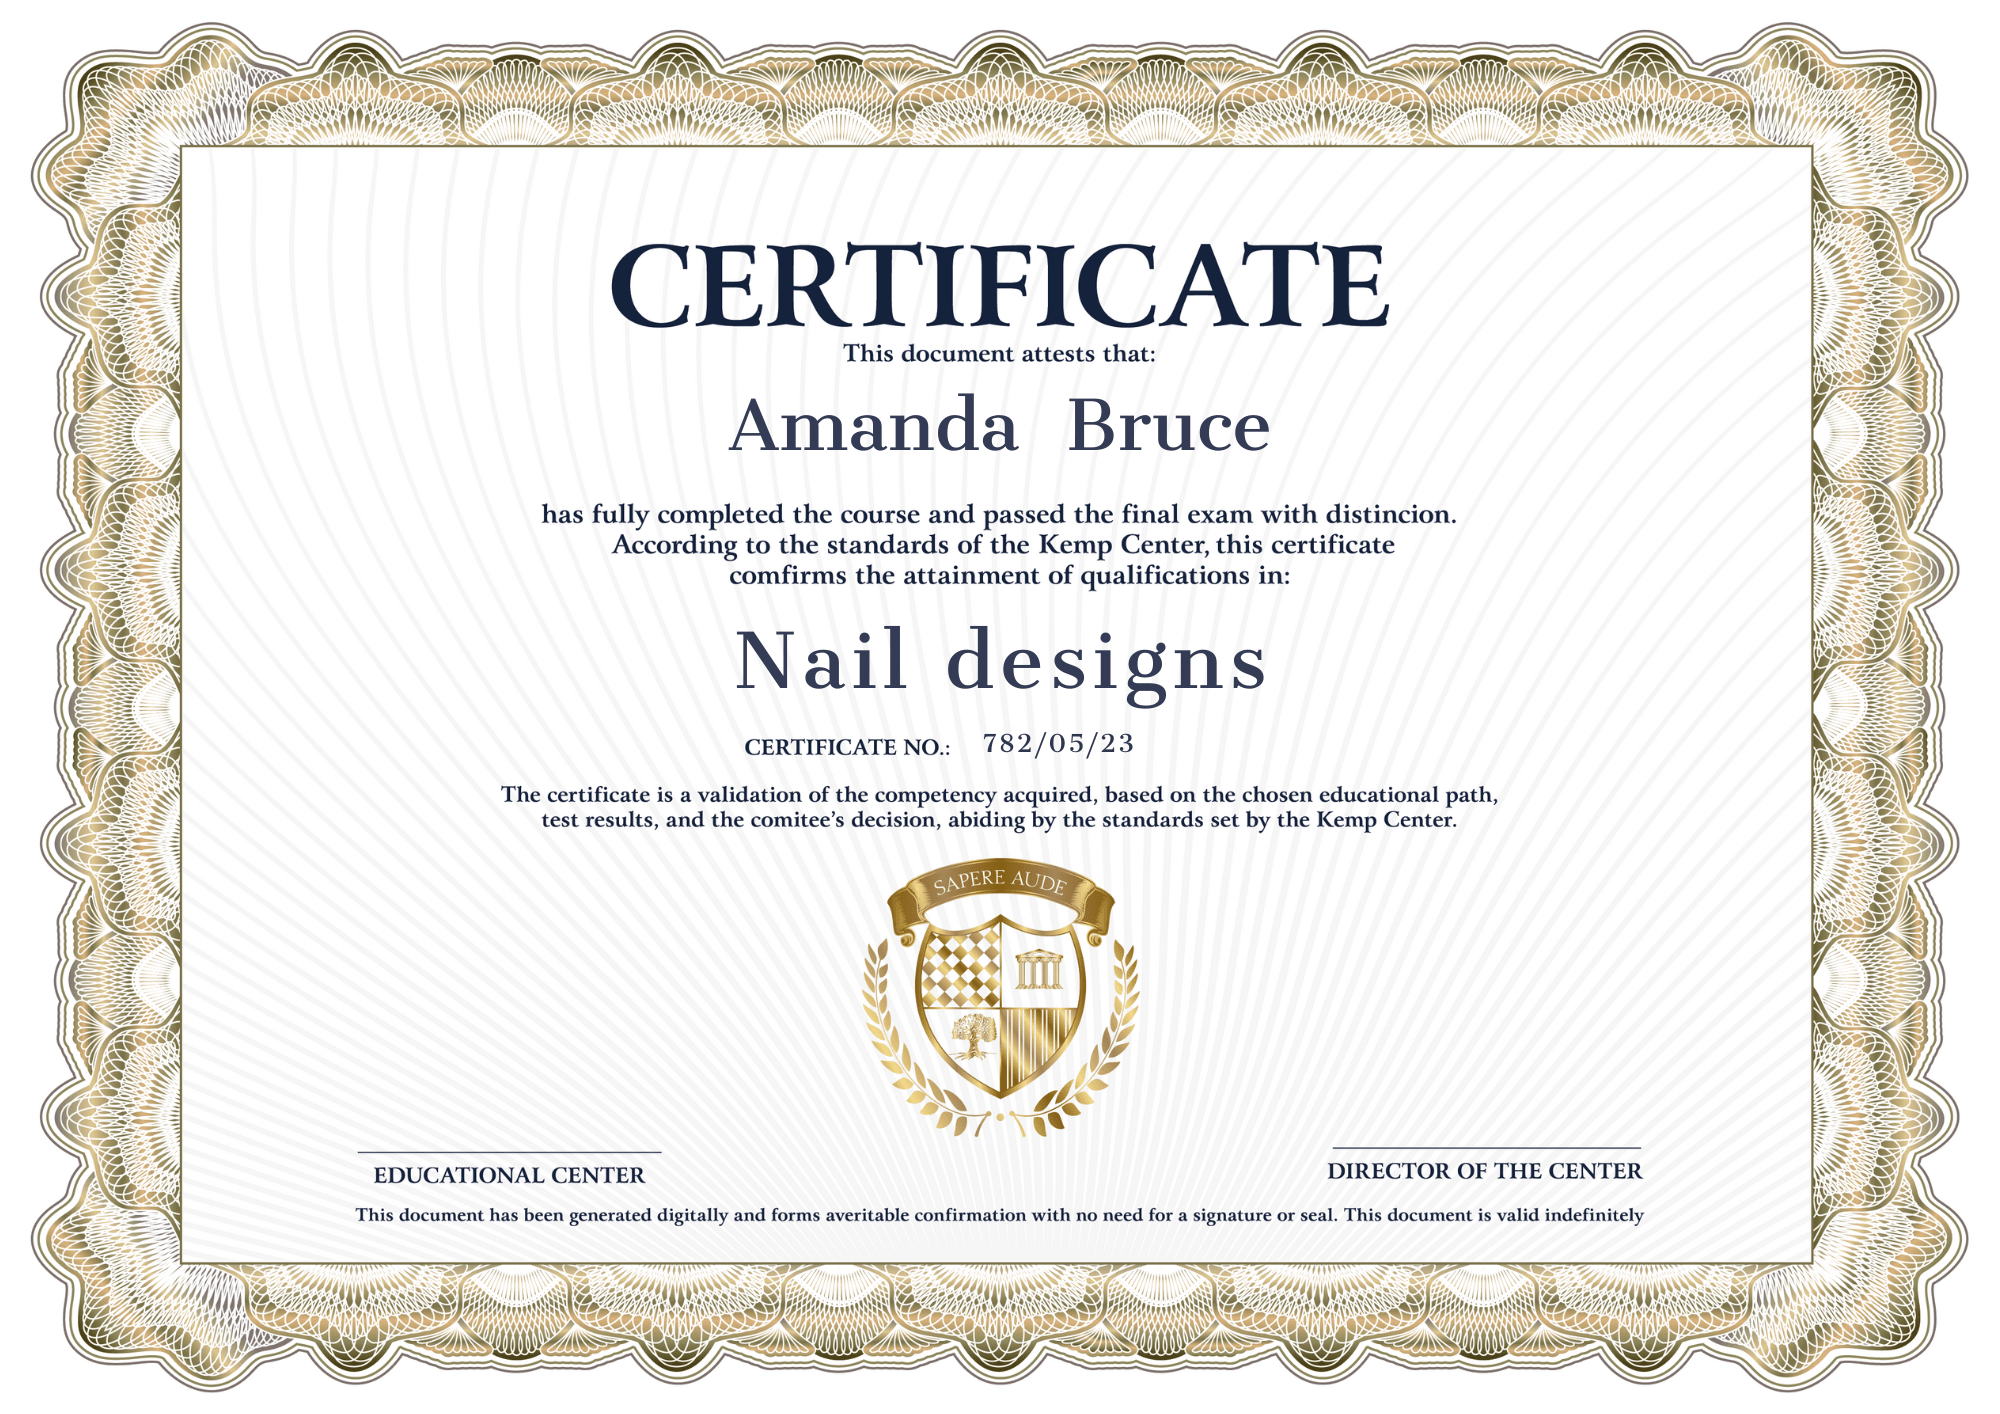 Certificate Nail designs